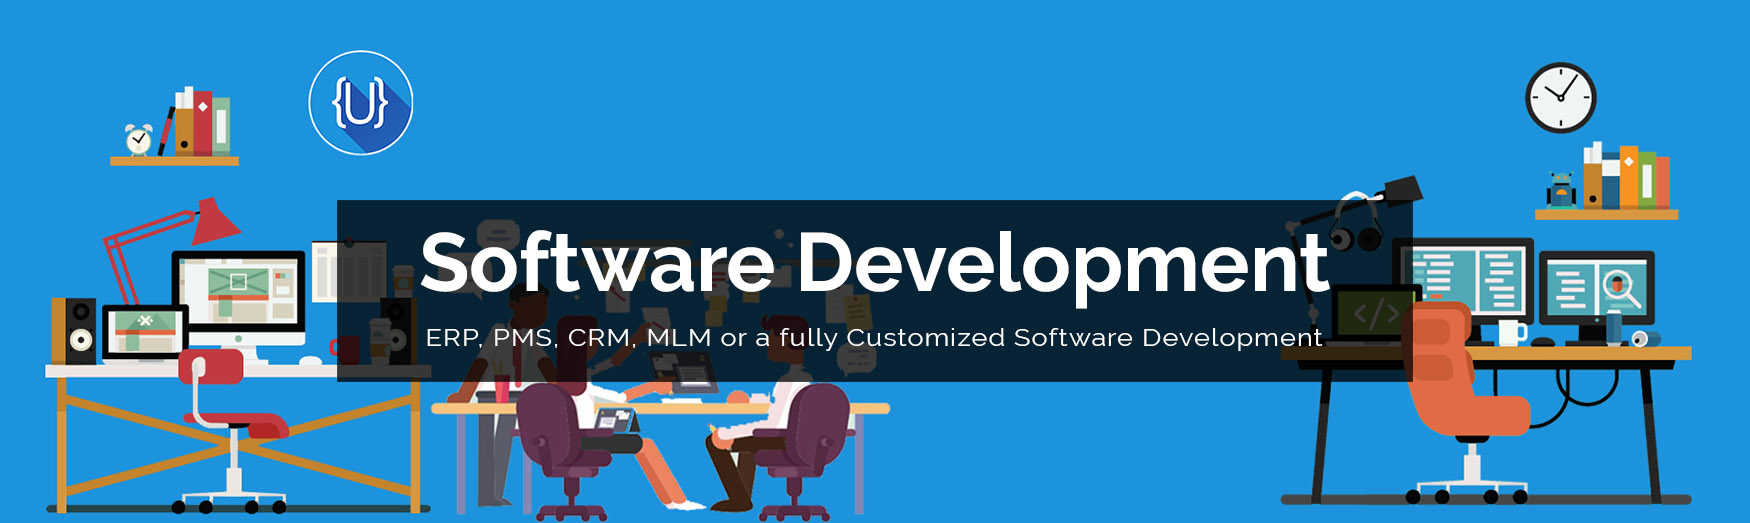 Software Development - ERP, CRM, MLM - Guwahati Assam - UJUDEBUG